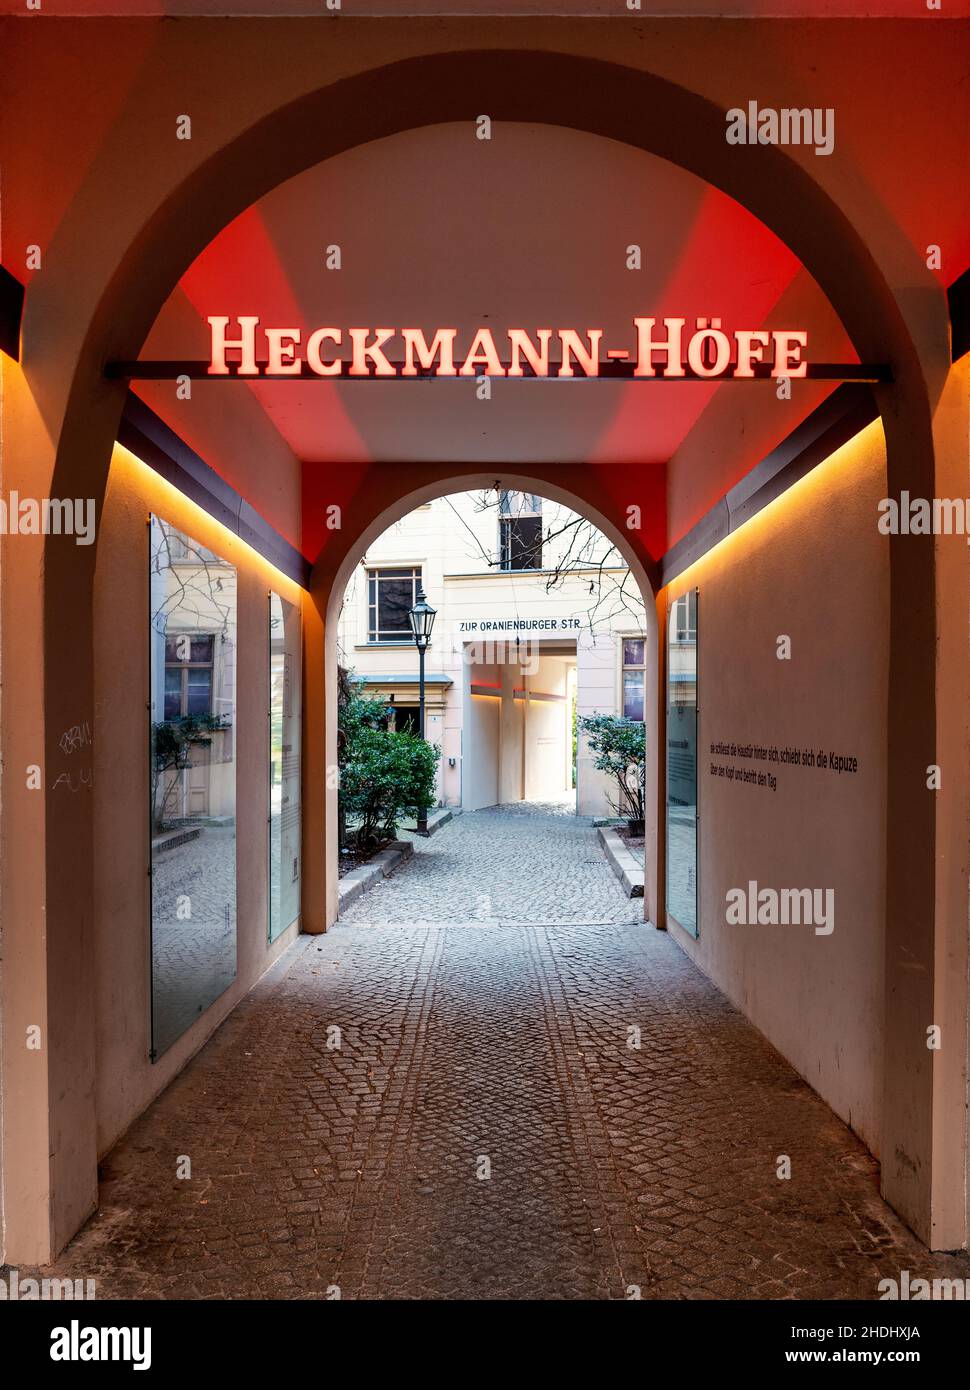 heckmann-höfe Stock Photo